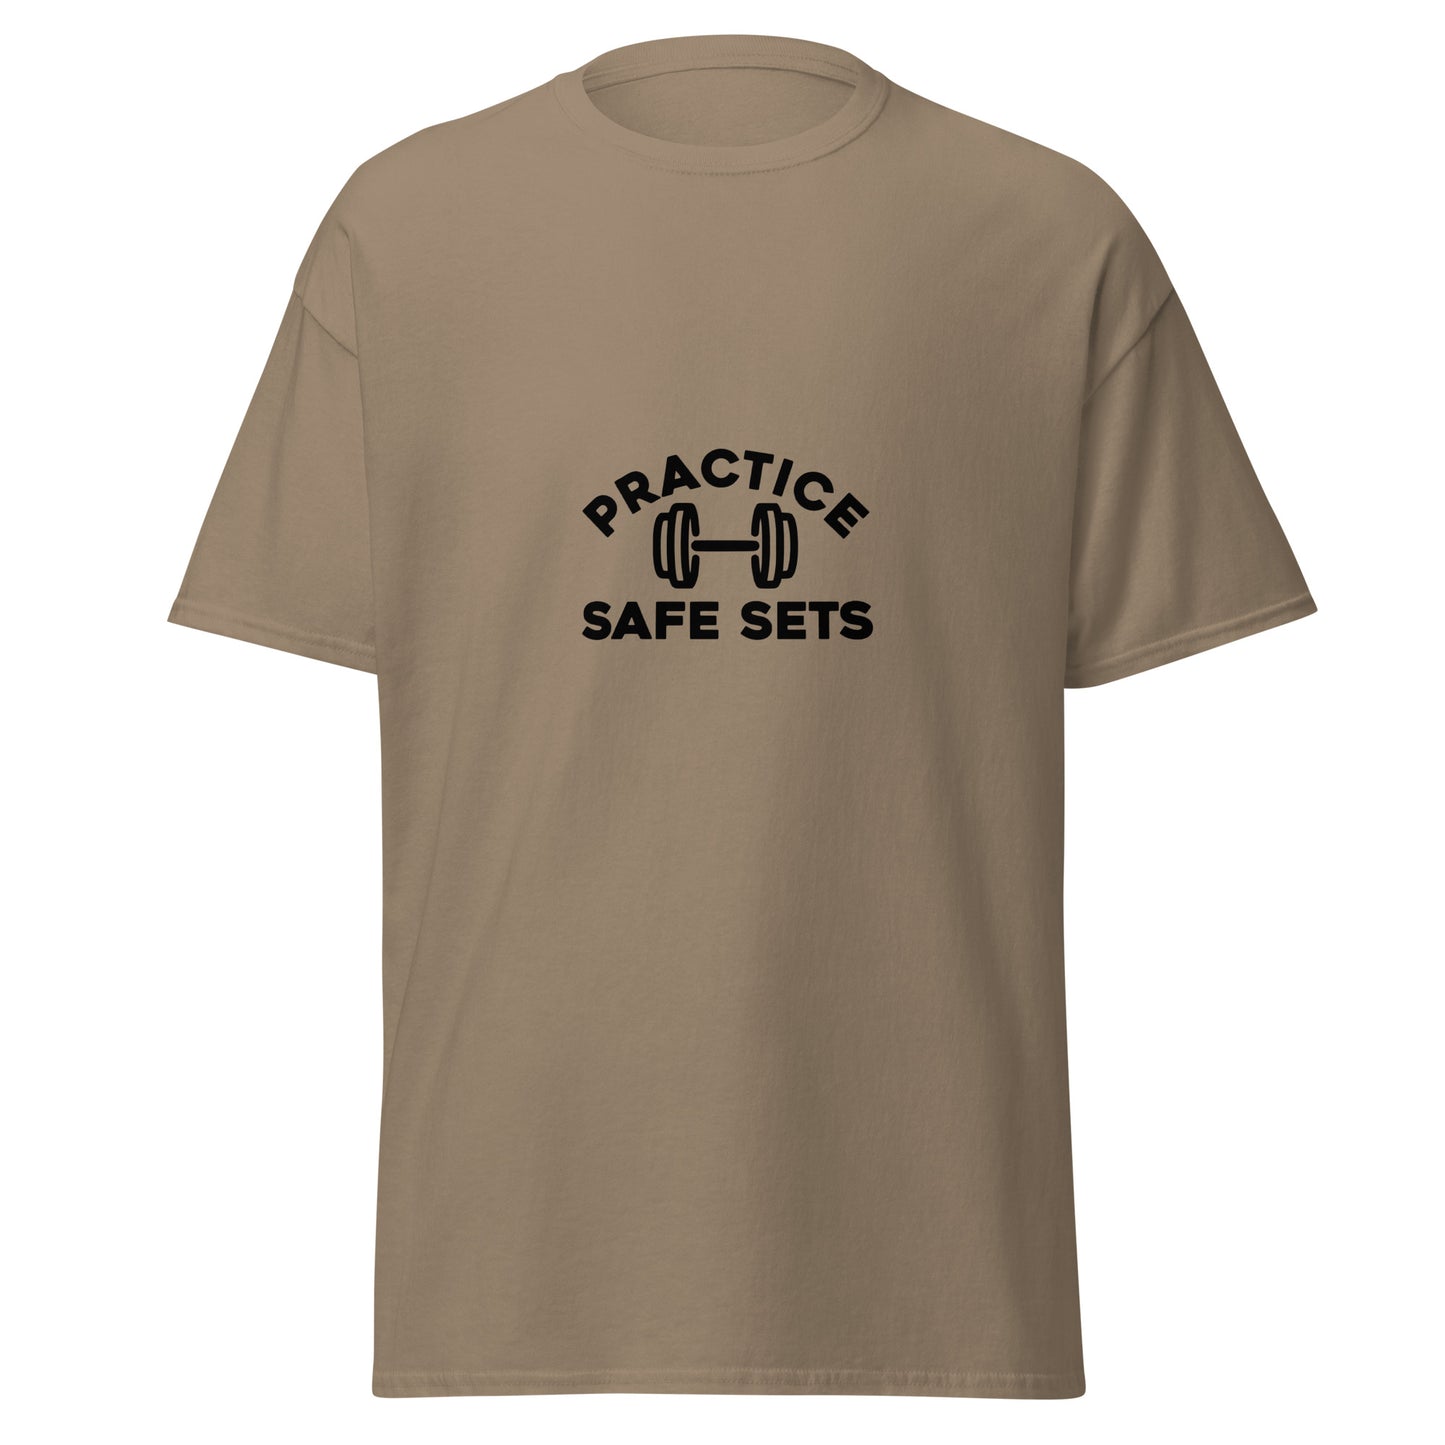 Practice Safe Sets Unisex Classic Tee